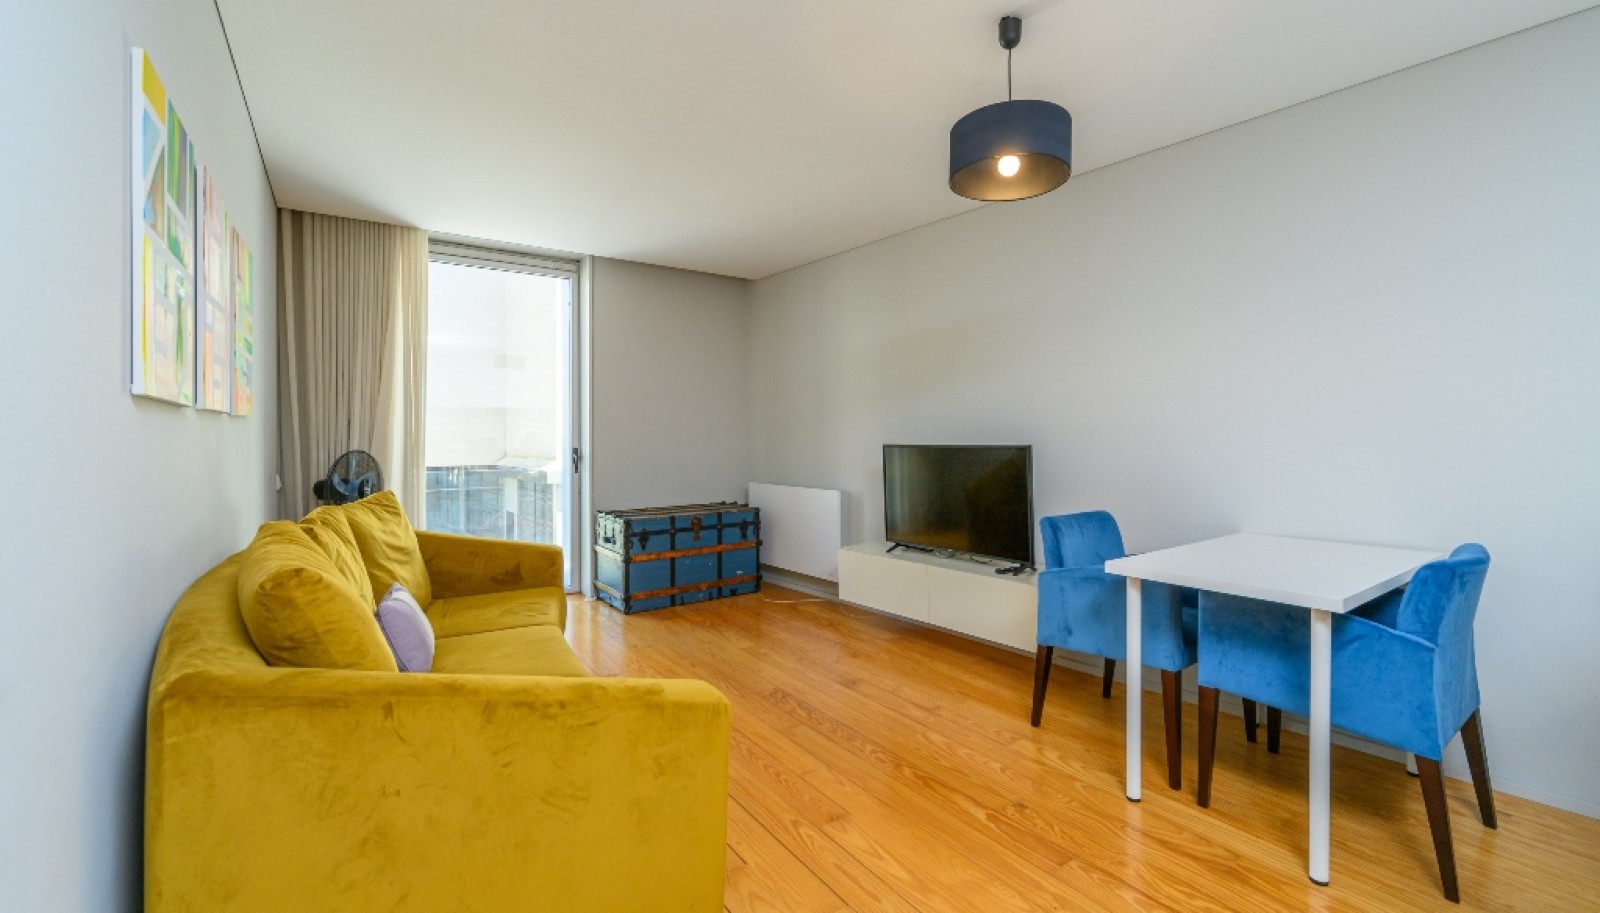 Appartement de 1 chambre avec garage, à vendre, centre Porto, Portugal_261832